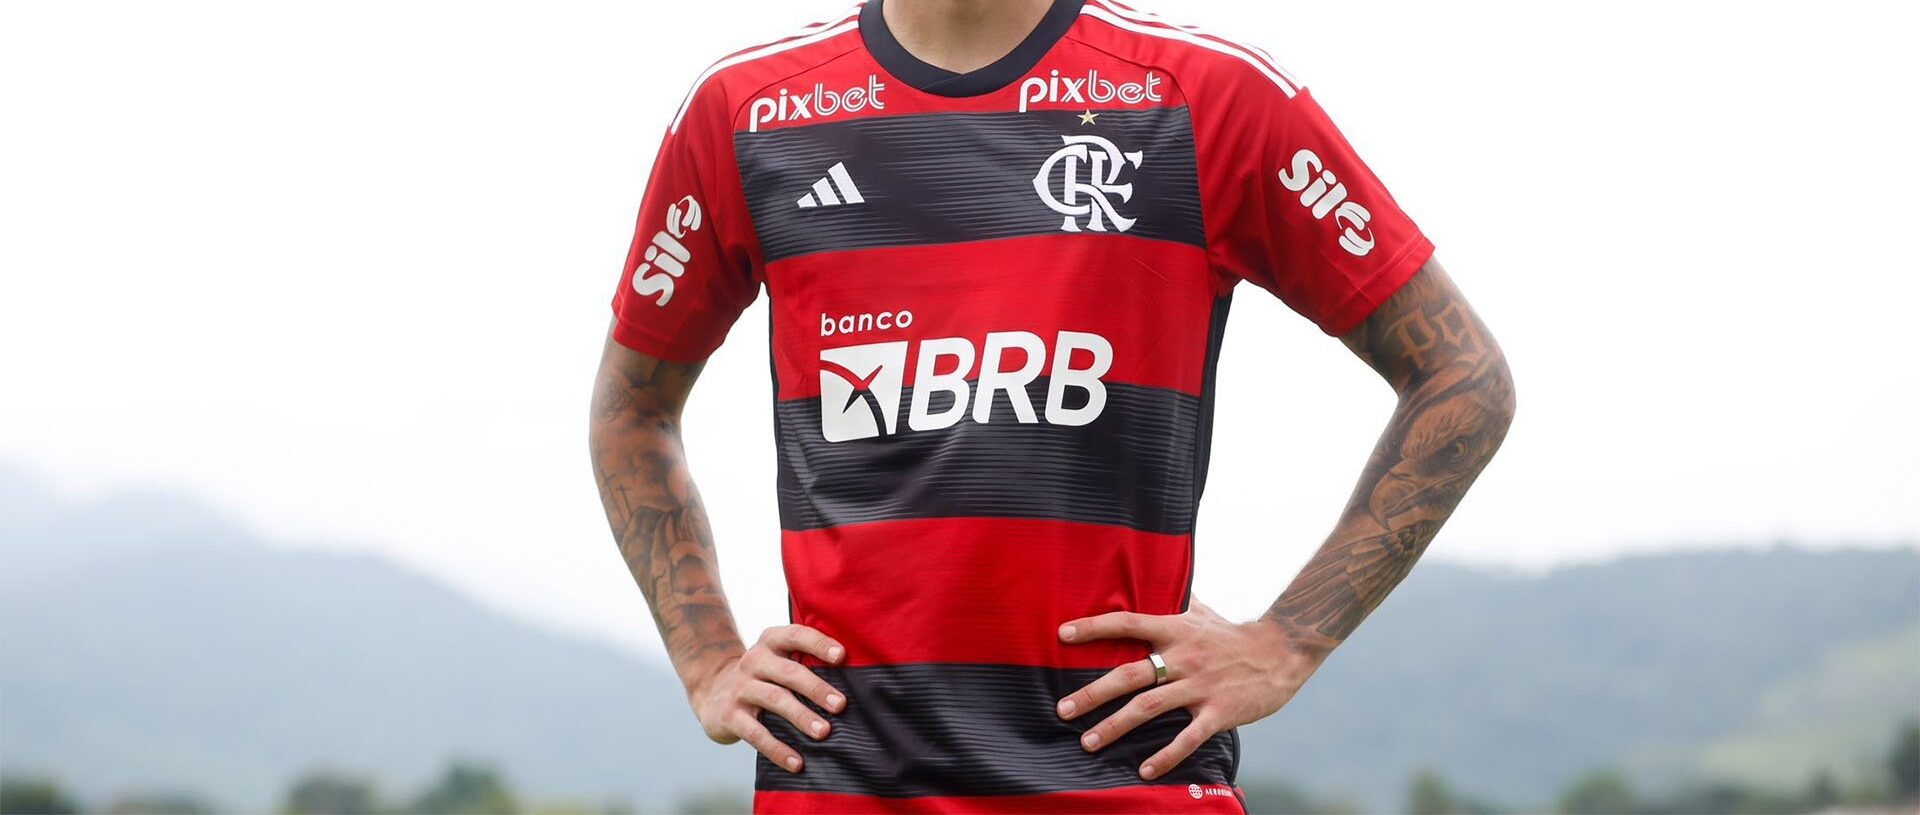 Sil Fios e Cabos Elétricos anuncia patrocínio ao Flamengo